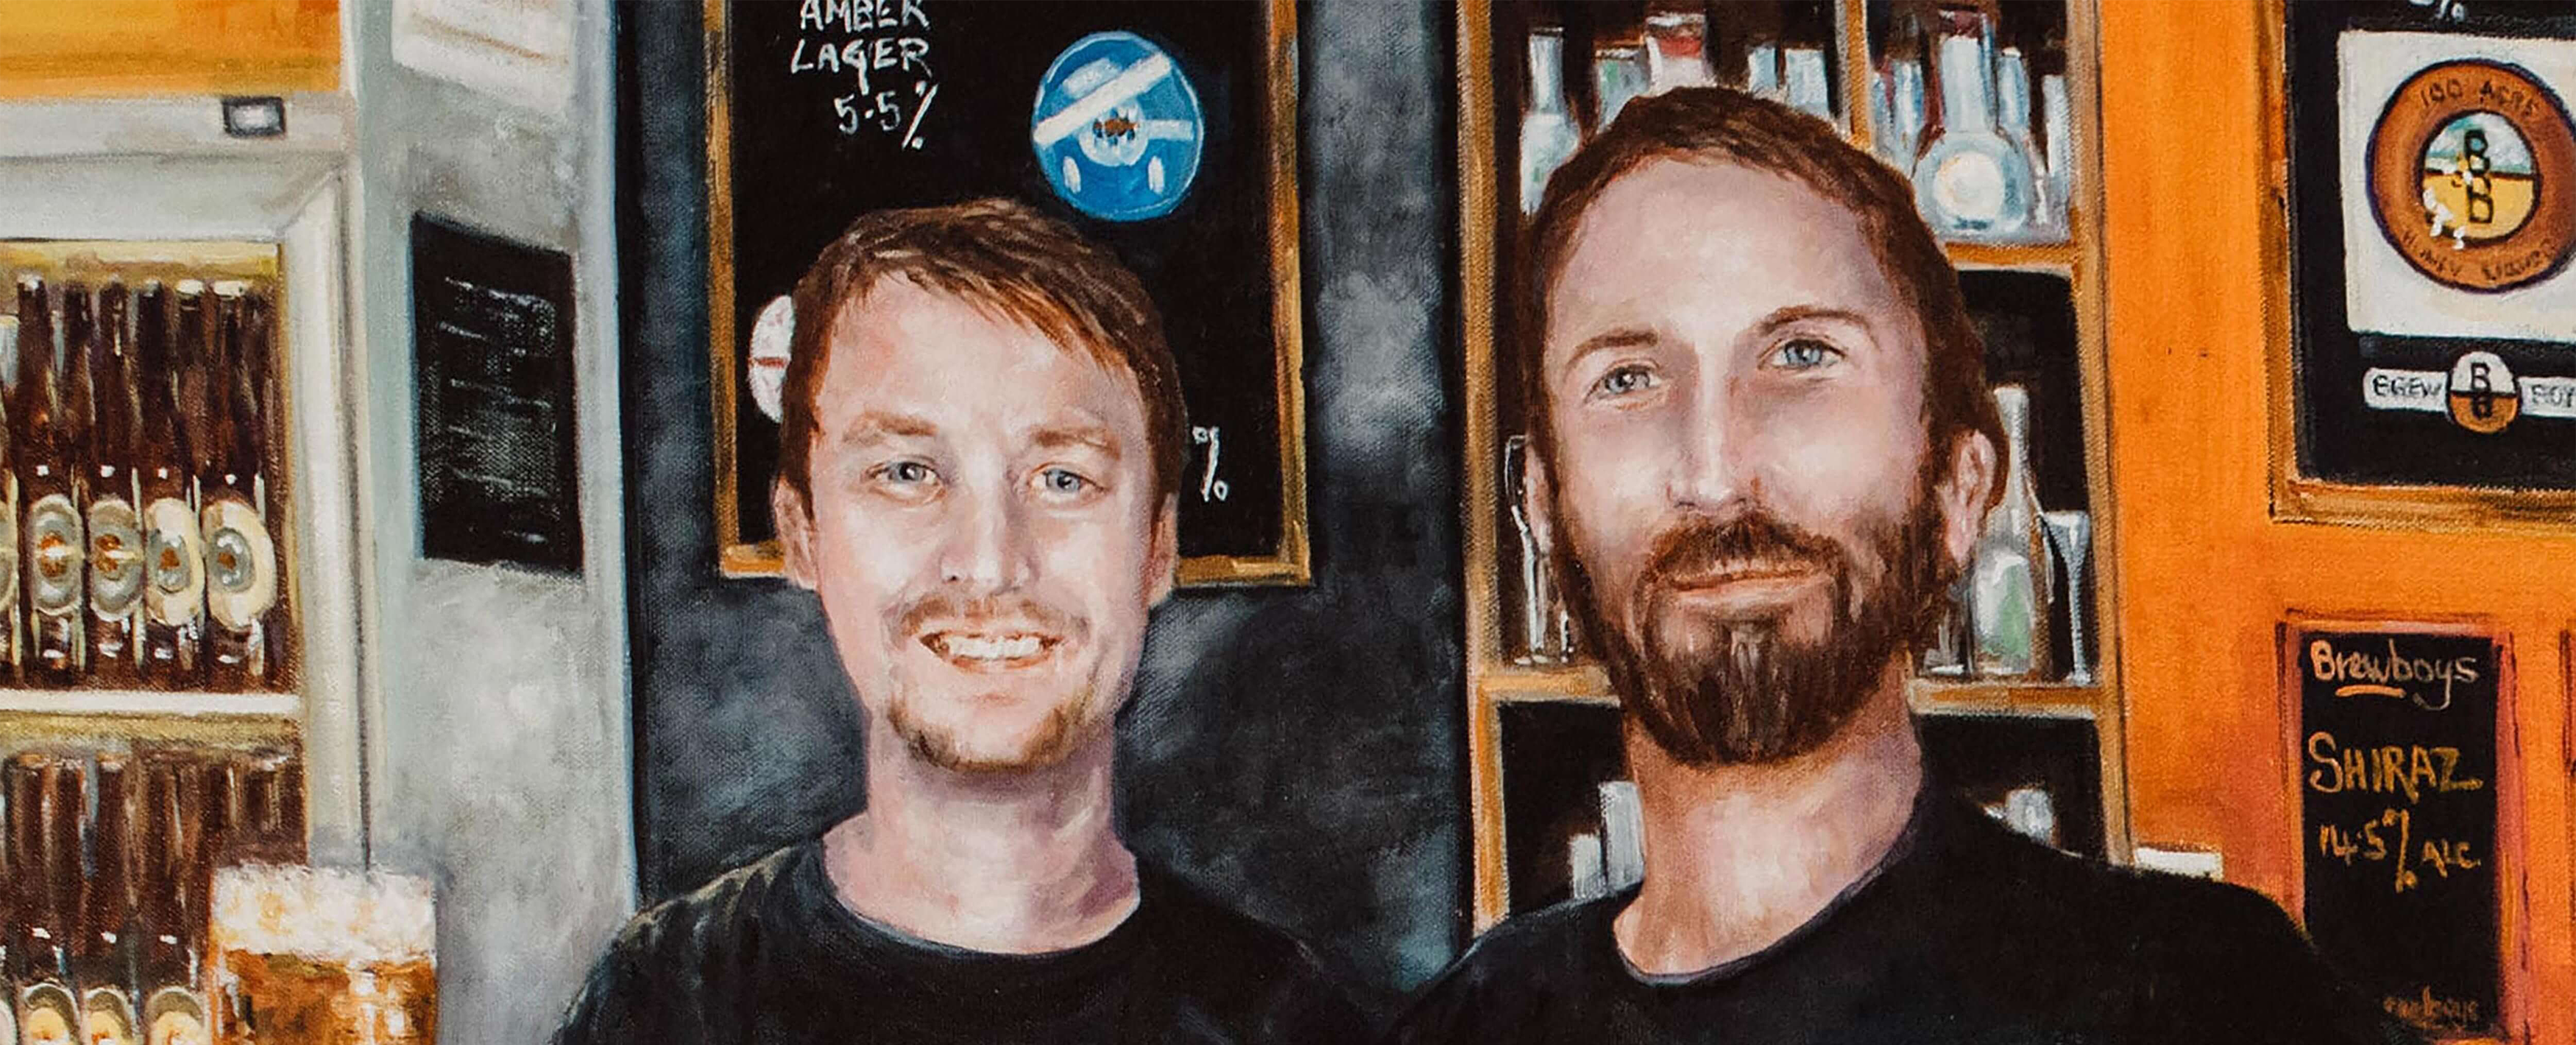 Painting of the Brewboys, Owen and Dan